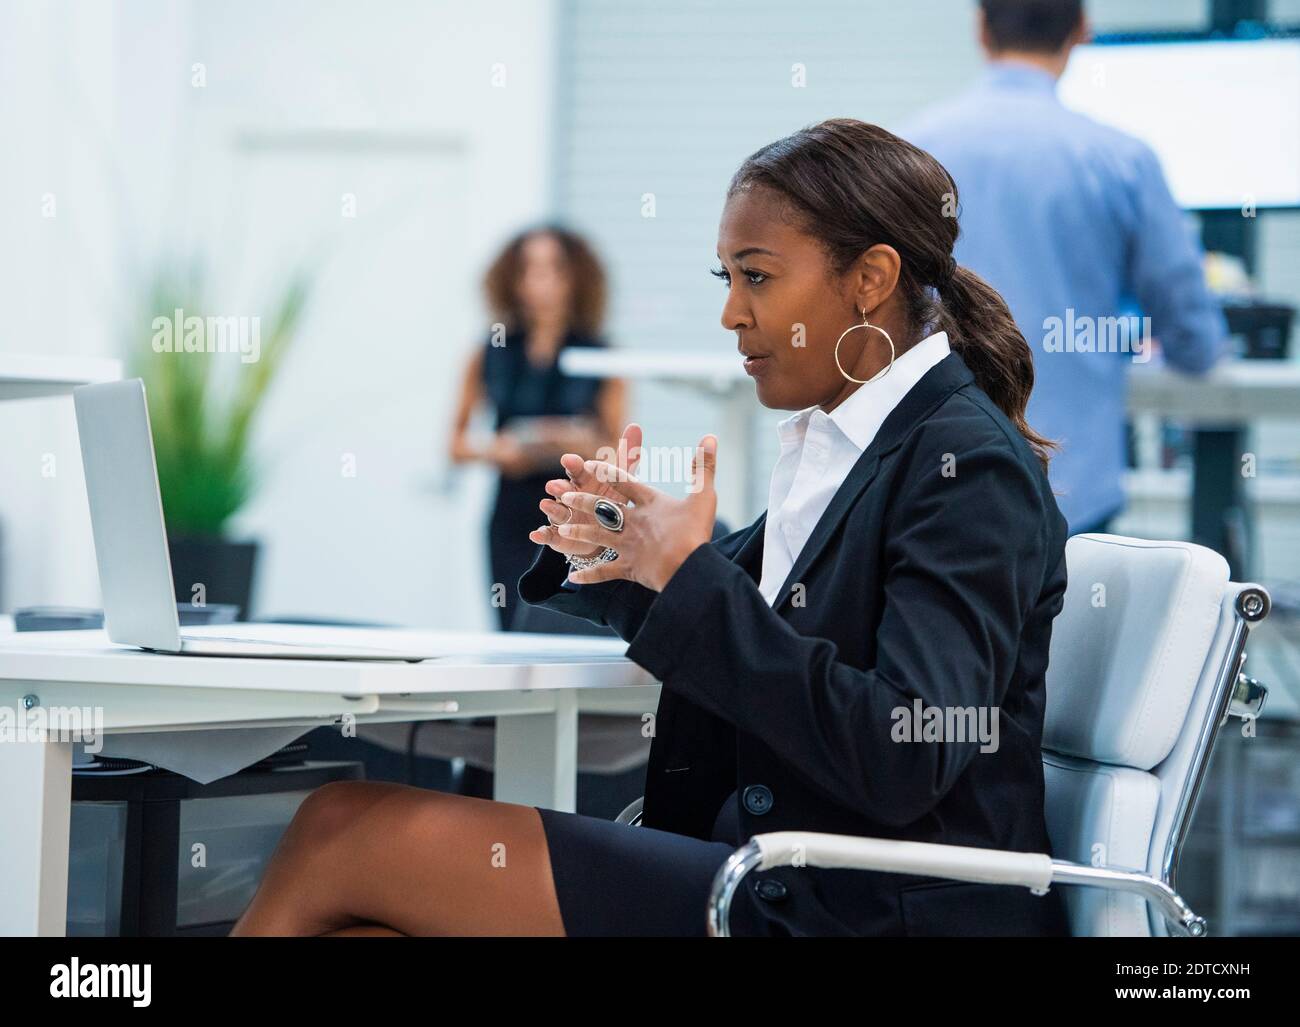 Businesswoman having video call via laptop in office Stock Photo